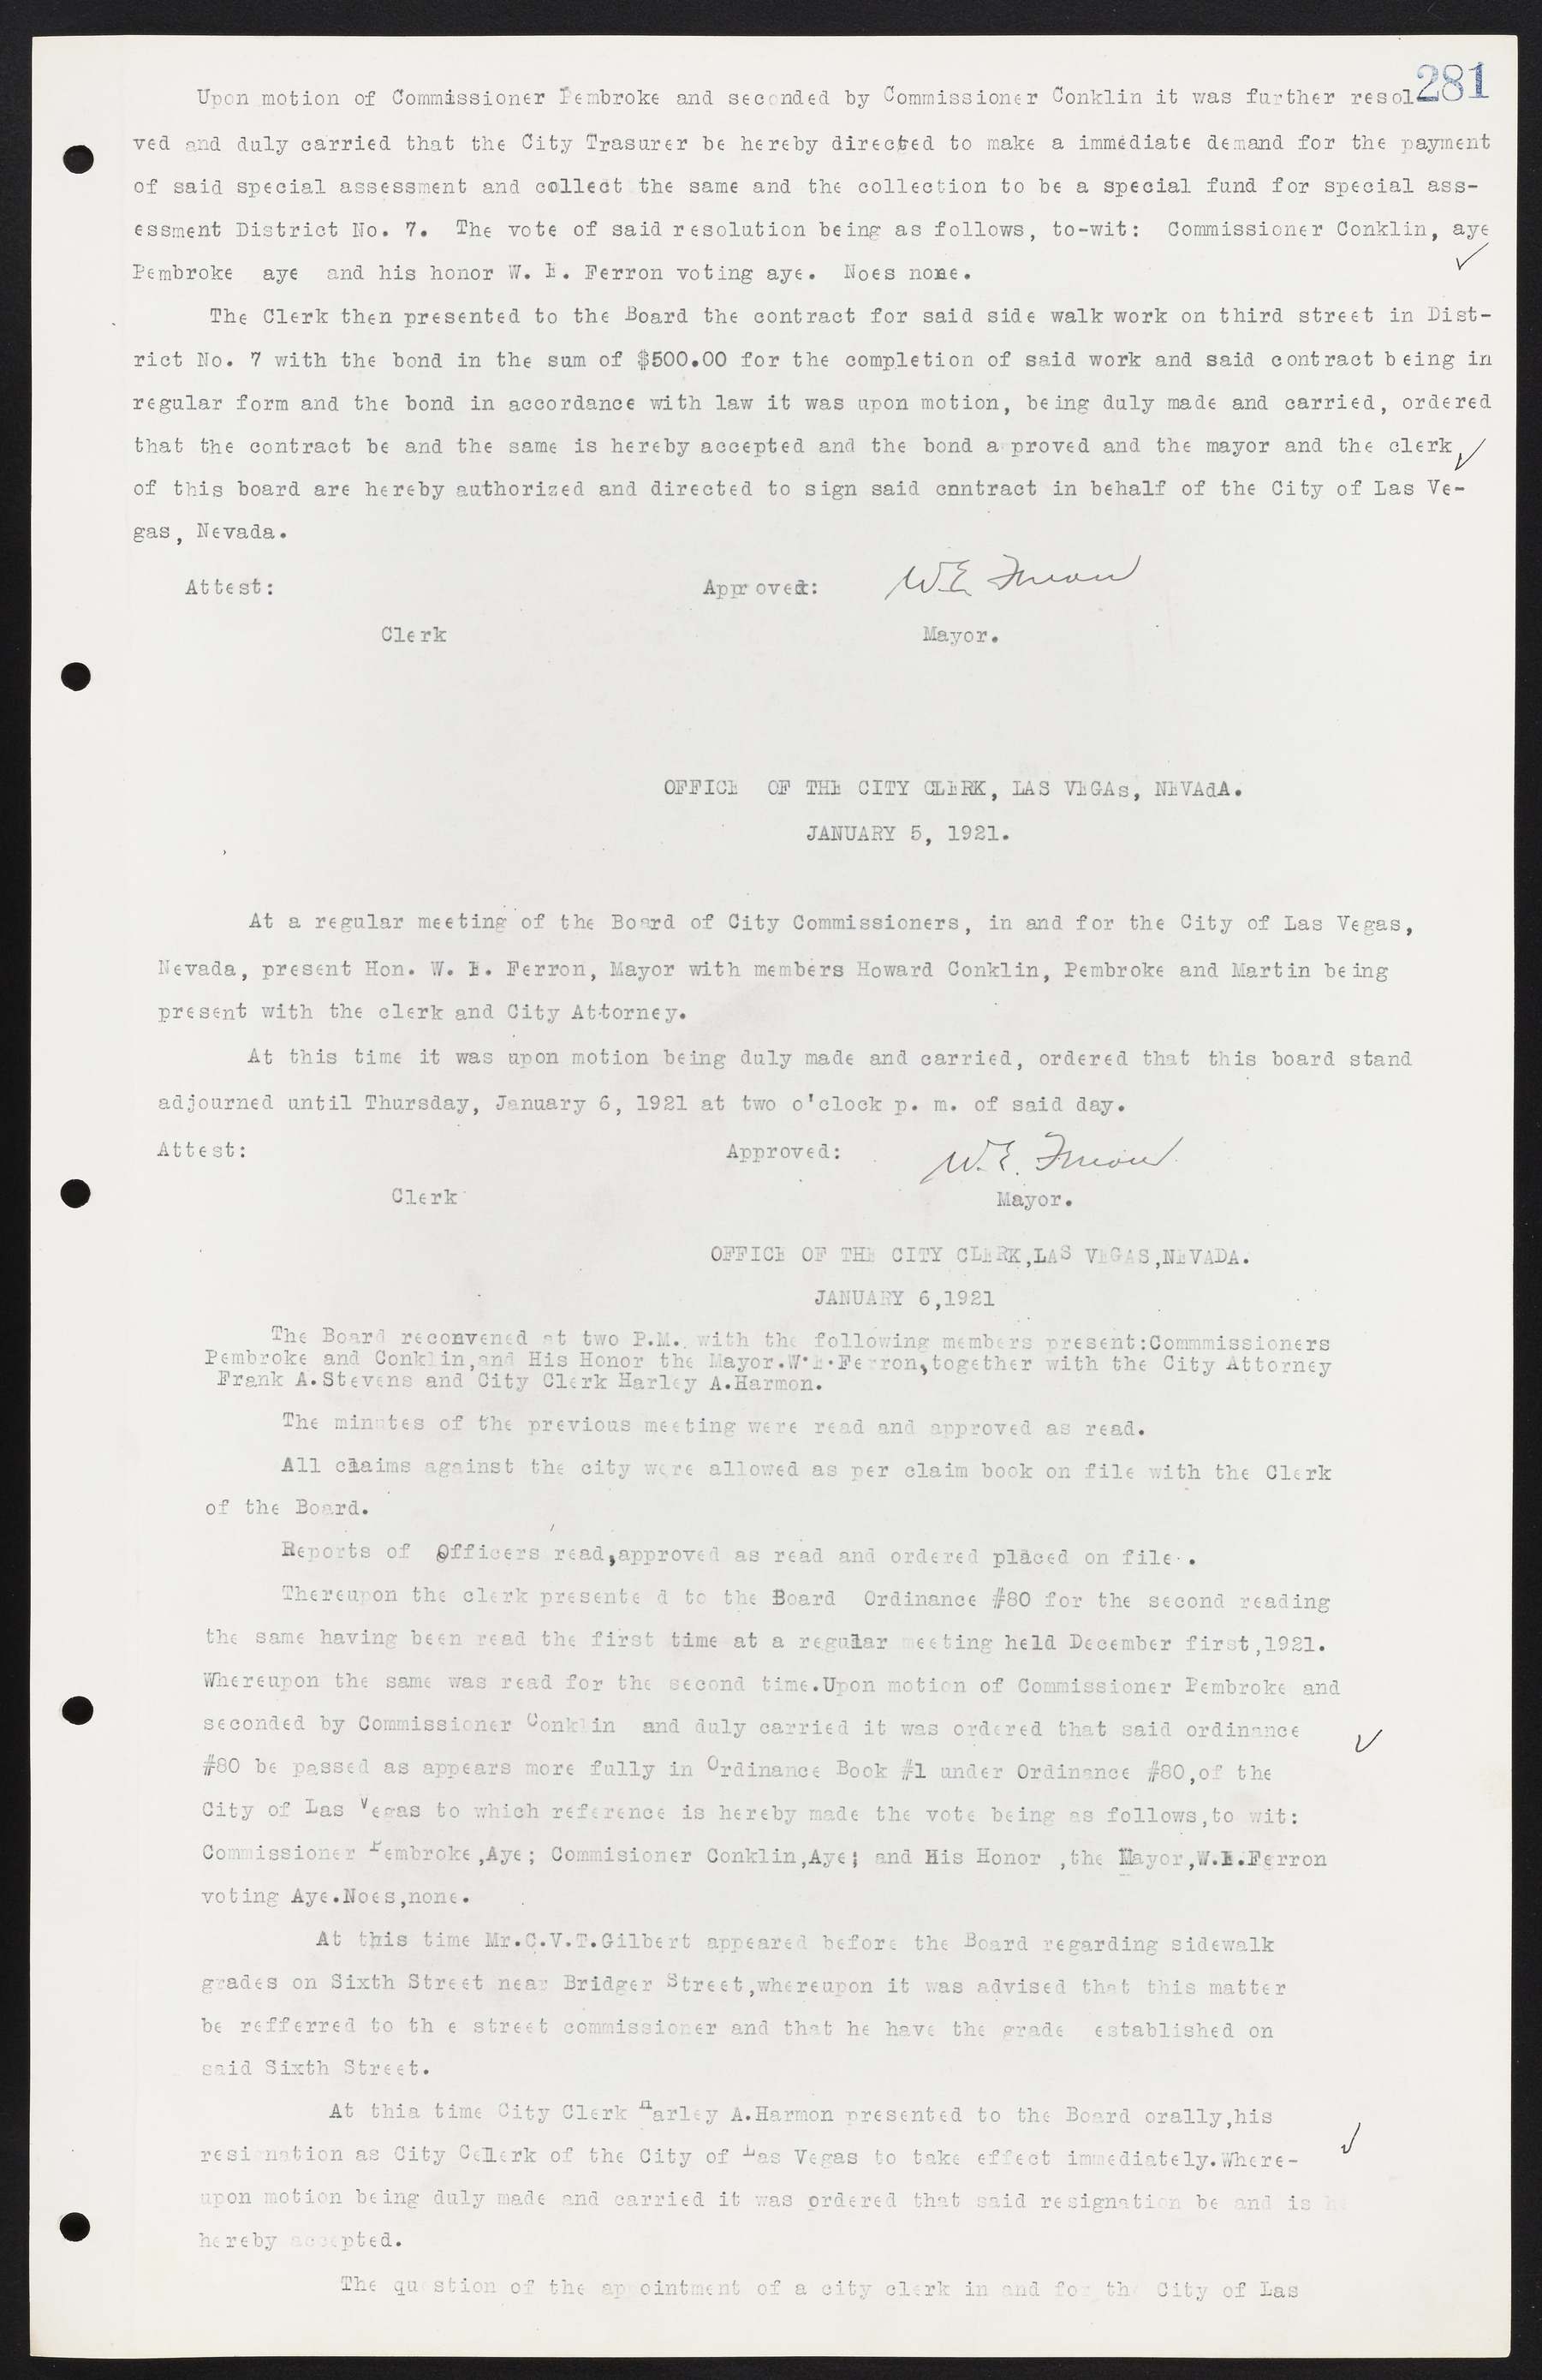 Las Vegas City Commission Minutes, June 22, 1911 to February 7, 1922, lvc000001-297